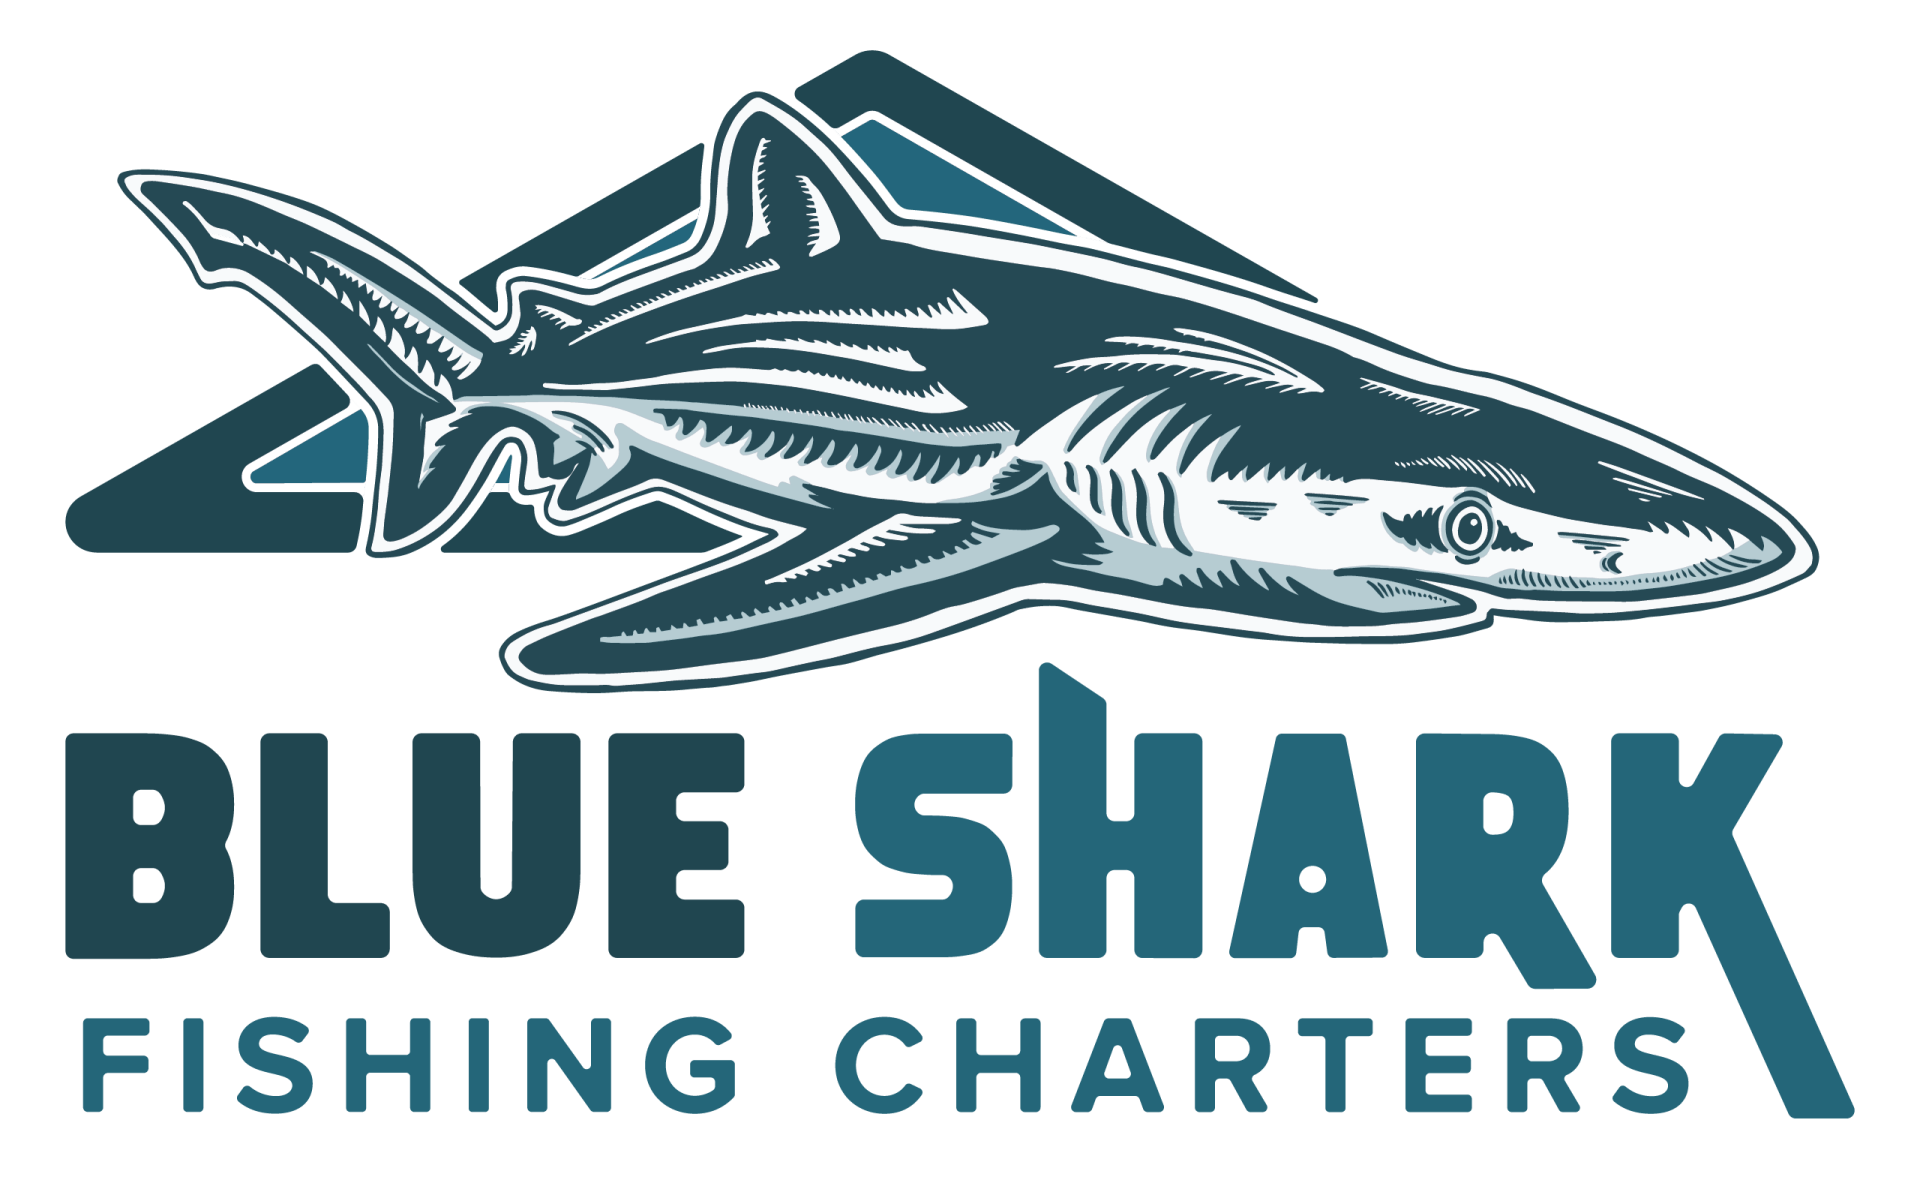 Deep Sea Fishing, Blue Shark Fishing Charters